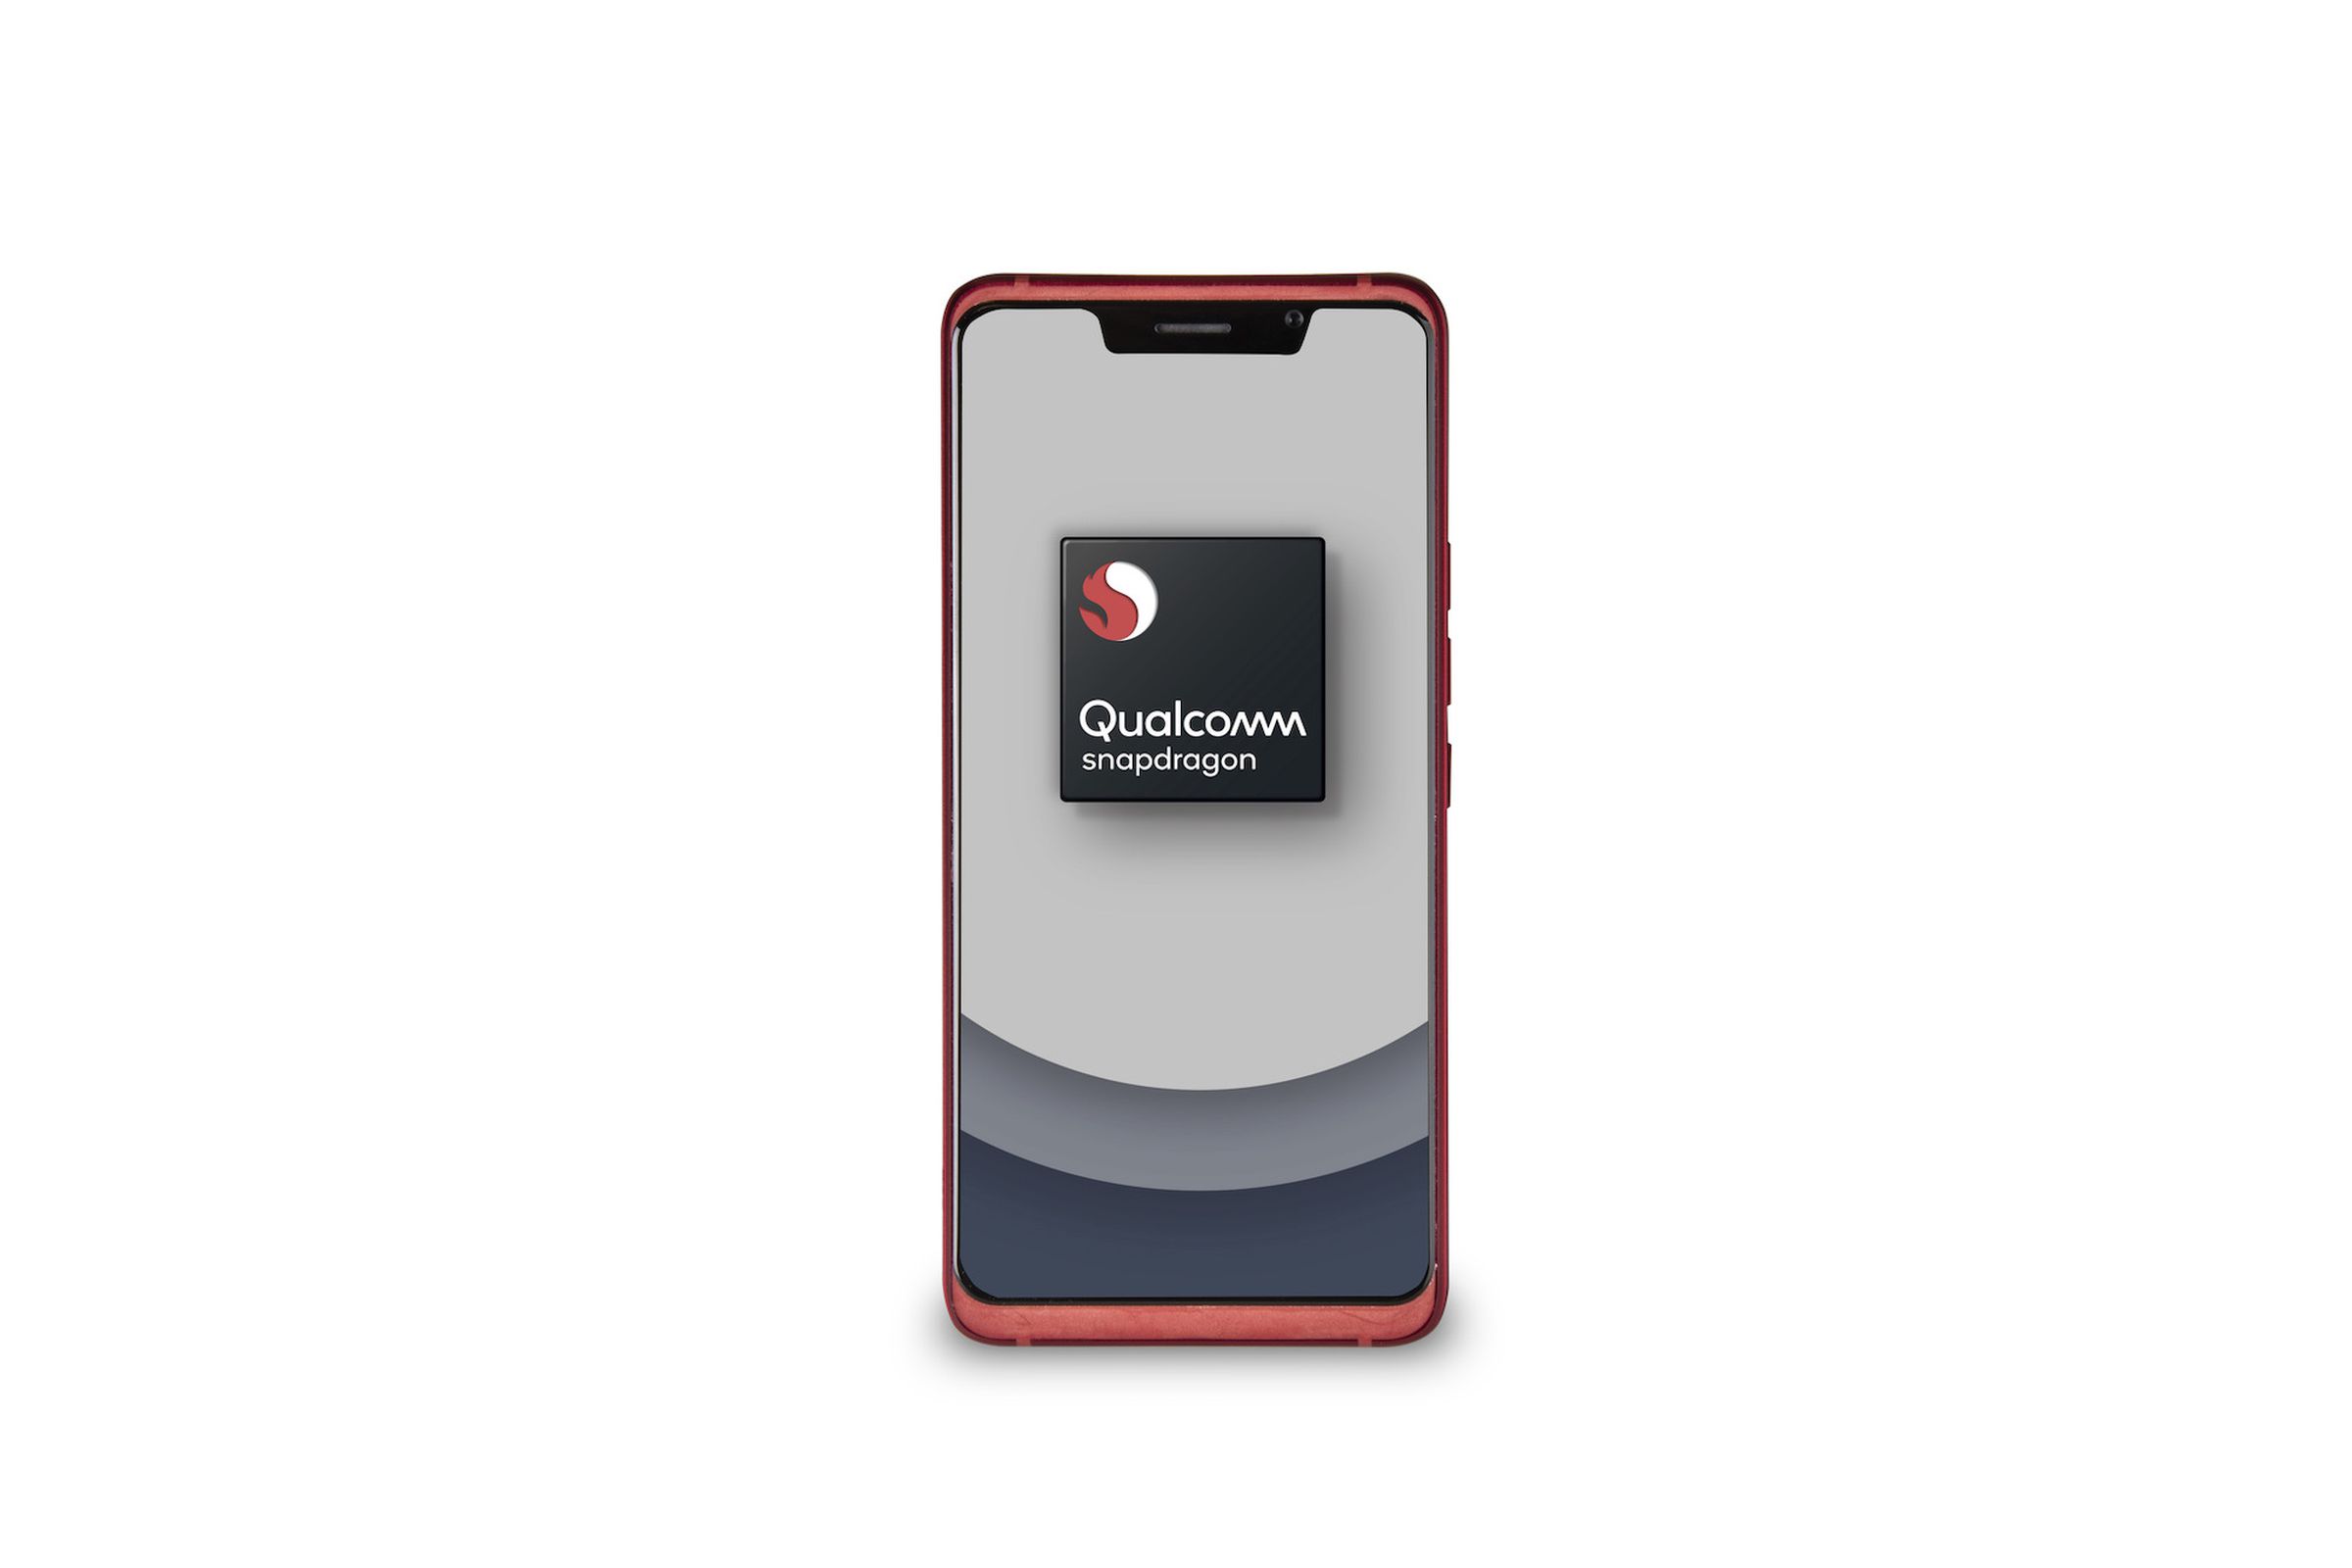 Qualcomm’s Snapdragon 665 reference design.